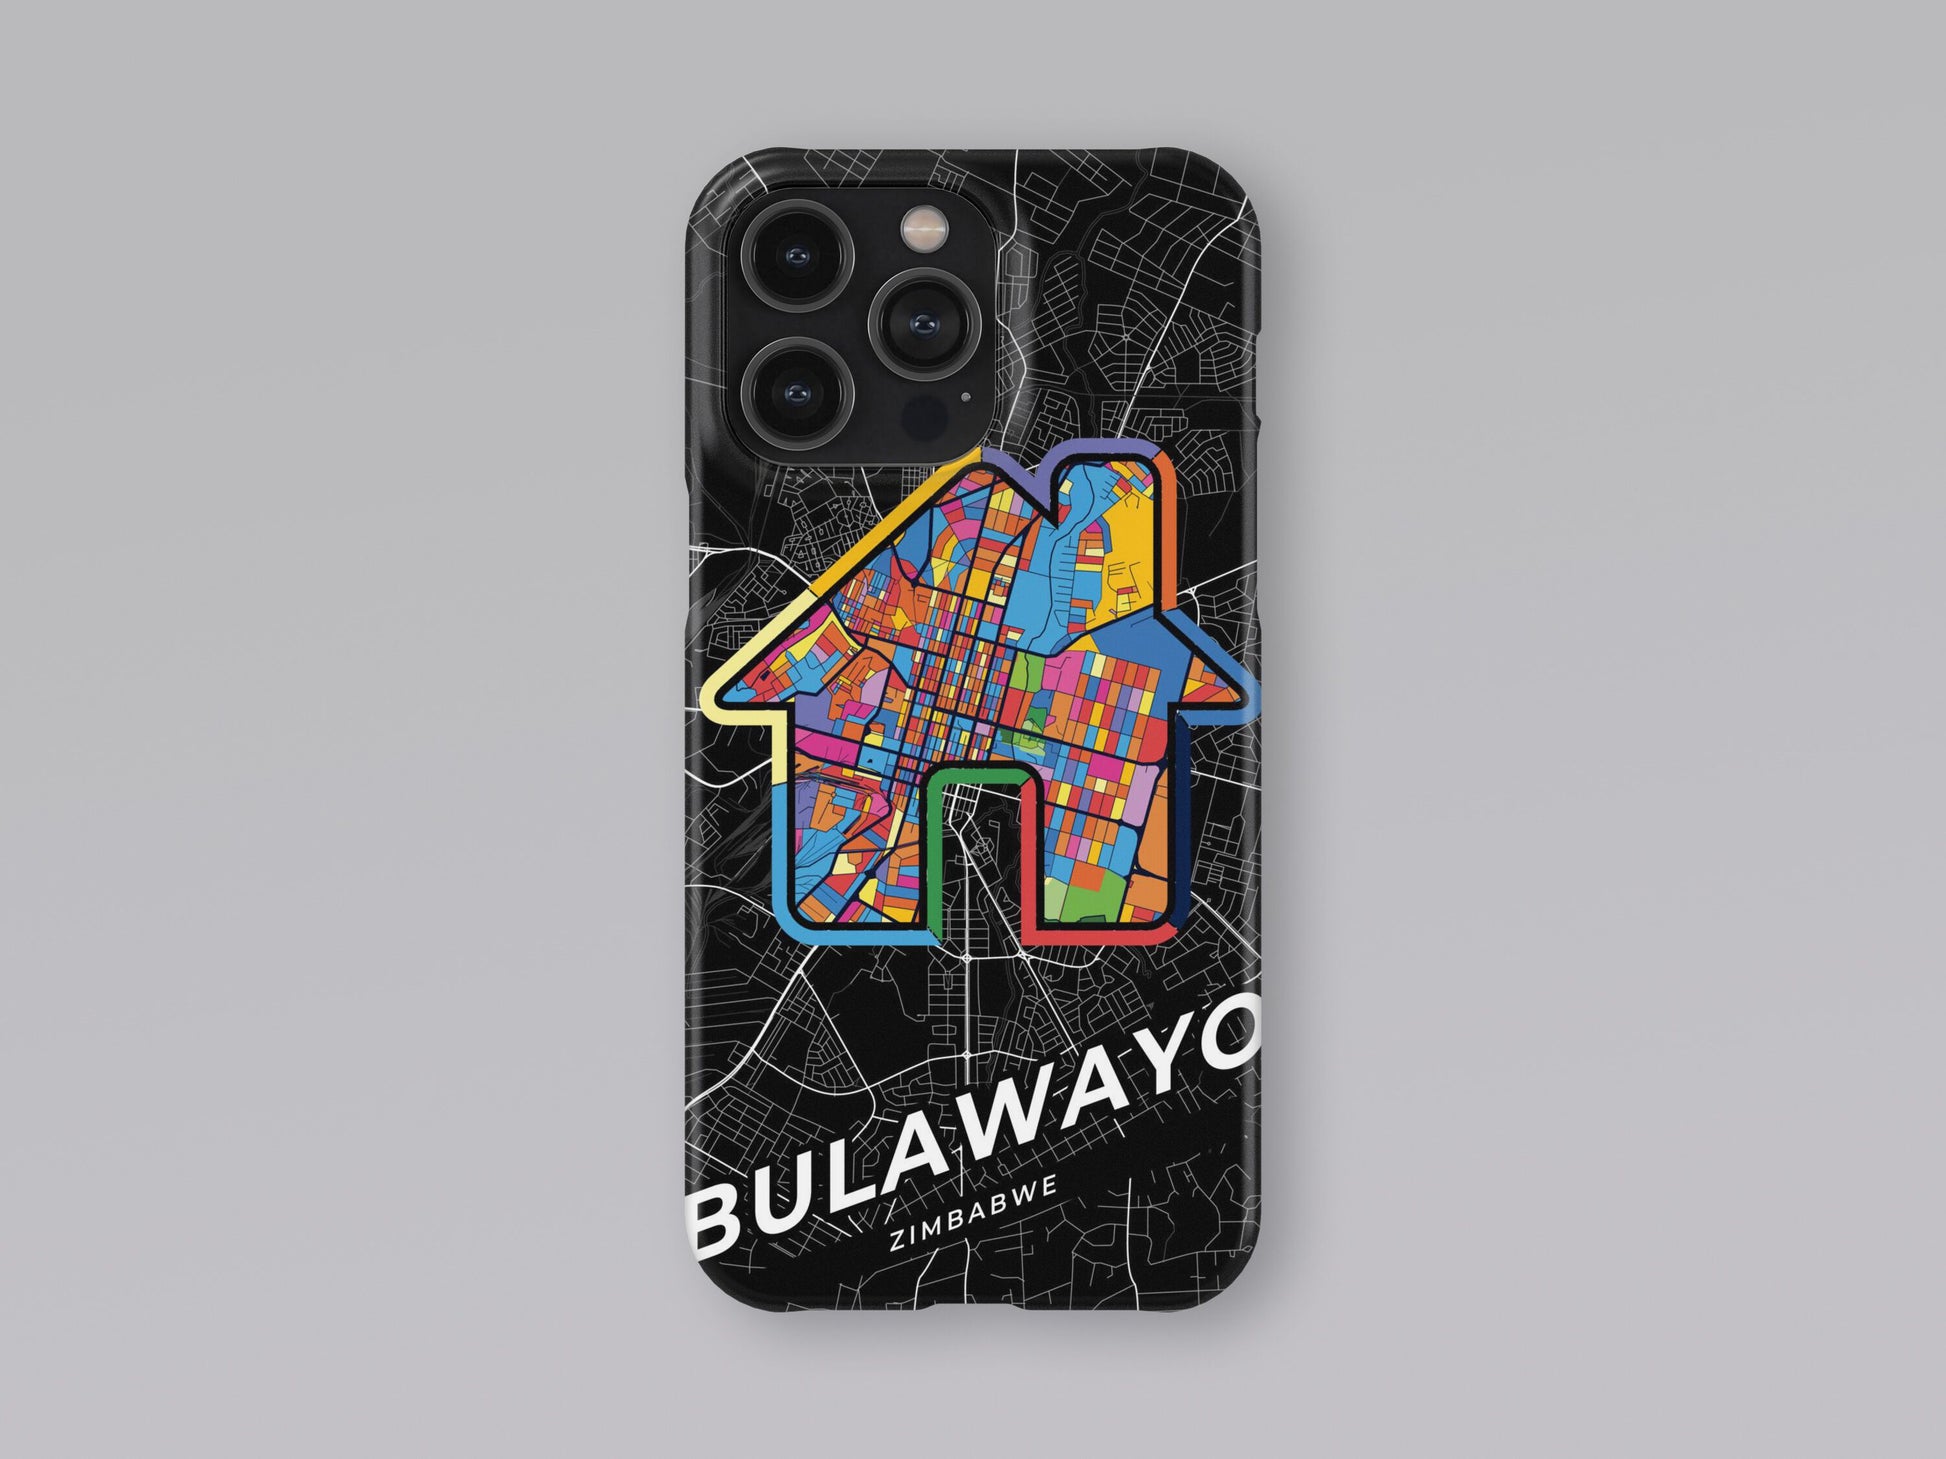 Bulawayo Zimbabwe slim phone case with colorful icon. Birthday, wedding or housewarming gift. Couple match cases. 3